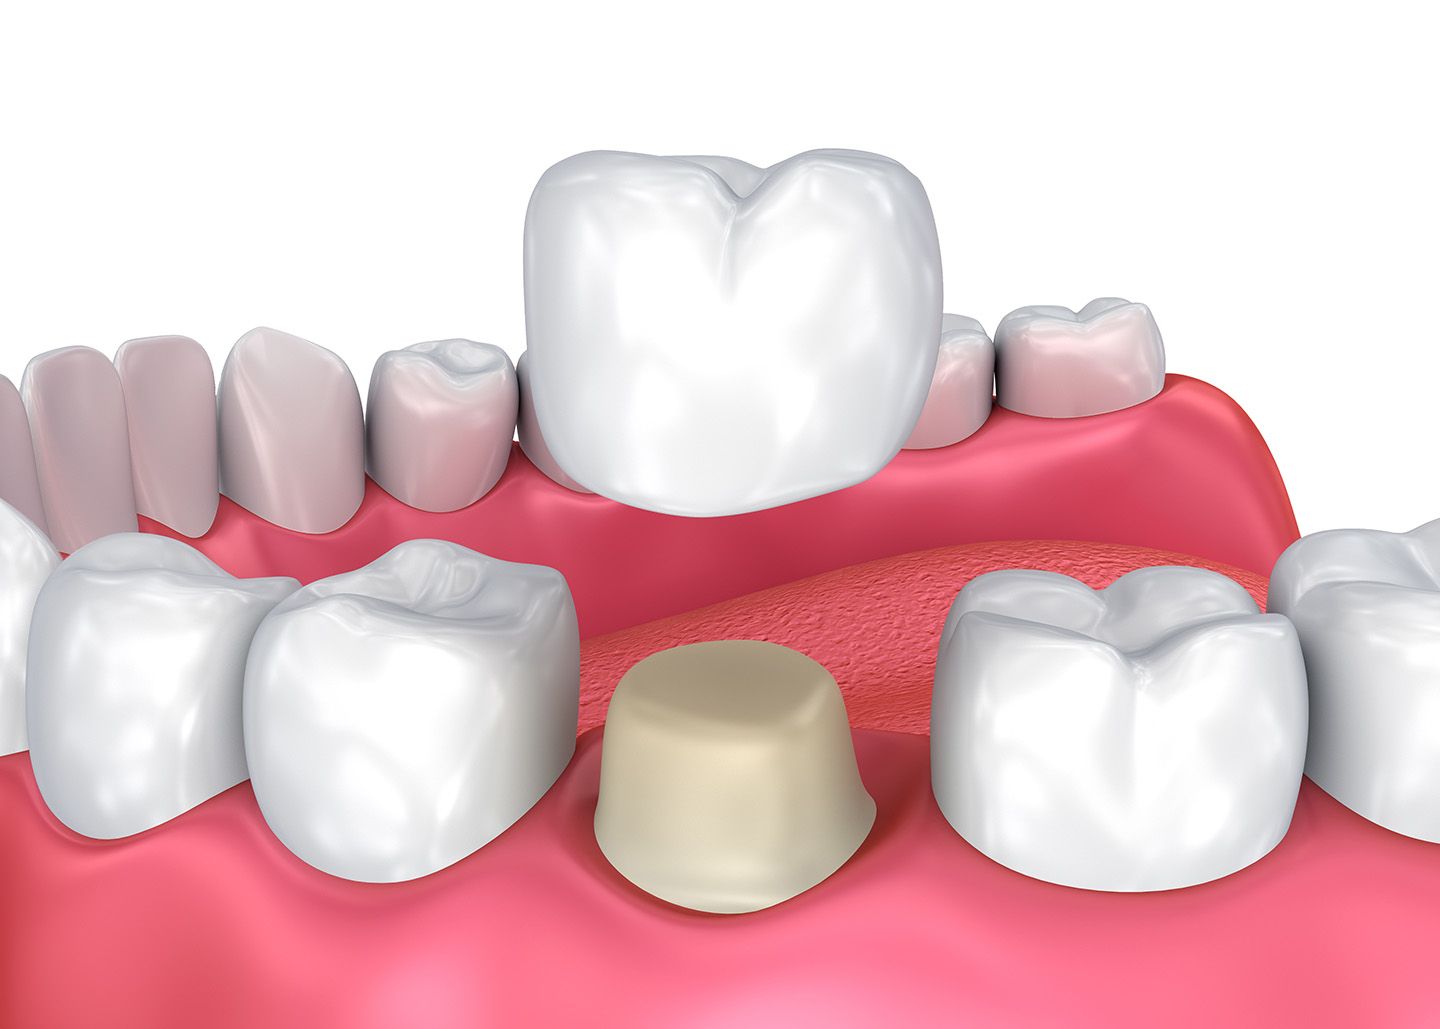 Prosthodontics - Absolute Dental ®